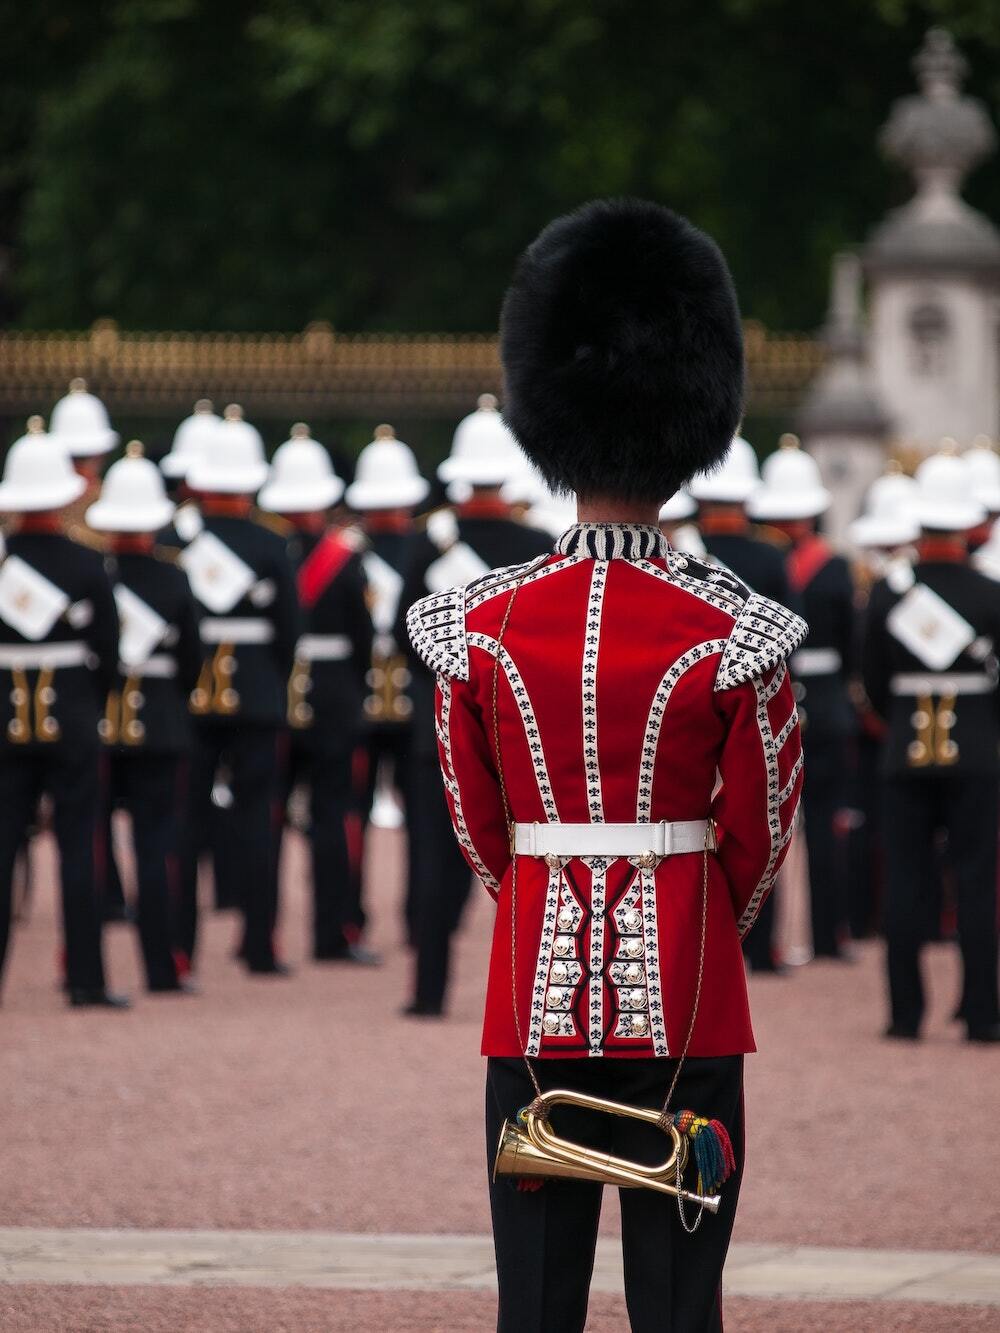 Change of Guard at Buckingham Palace